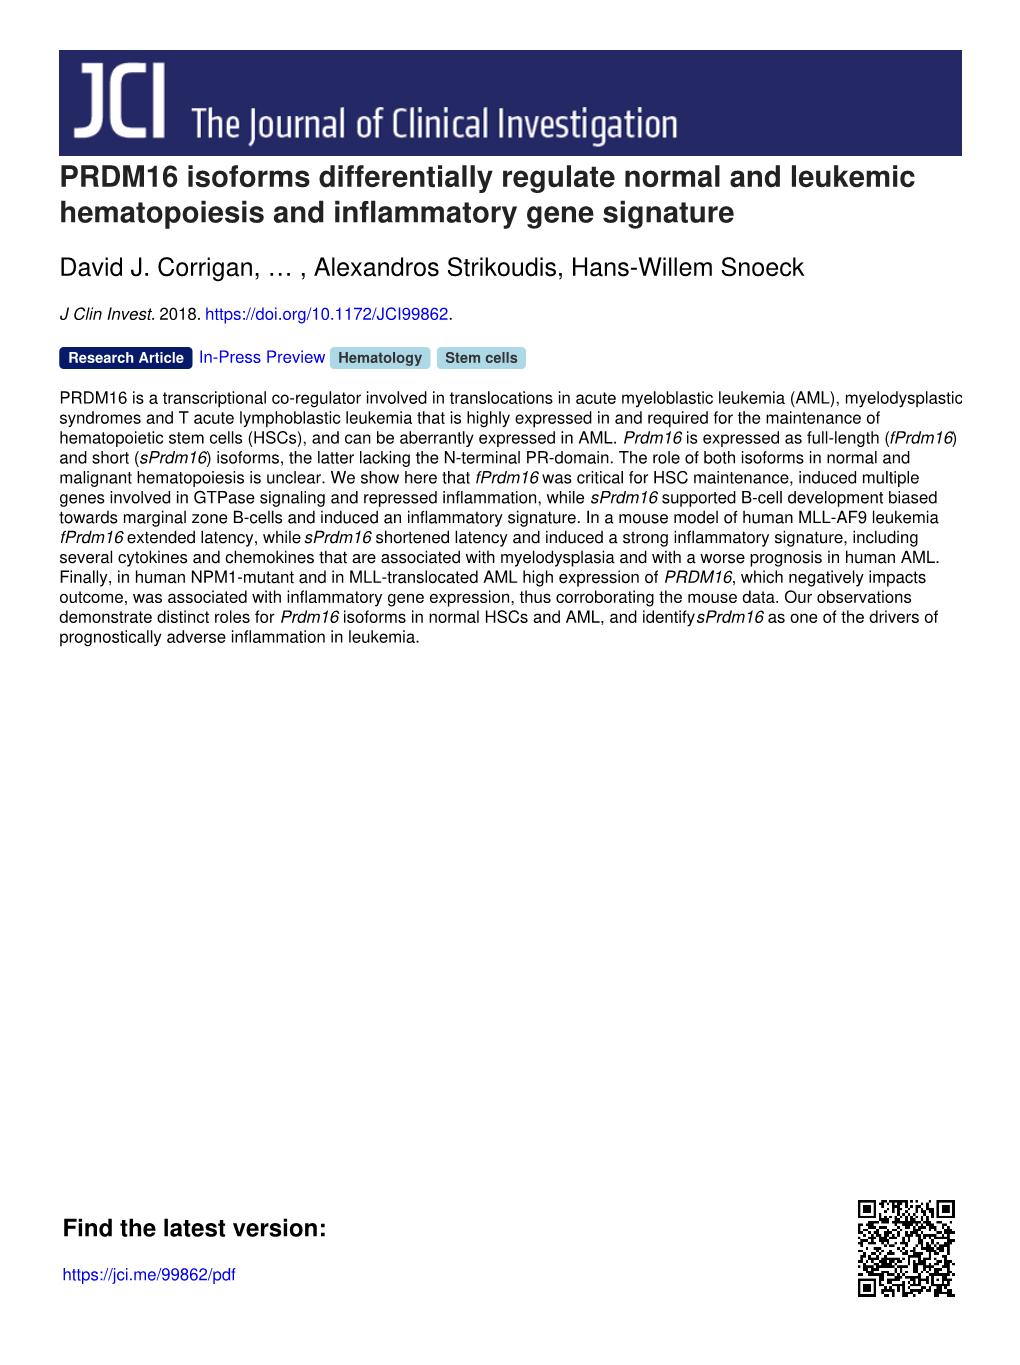 PRDM16 Isoforms Differentially Regulate Normal and Leukemic Hematopoiesis and Inflammatory Gene Signature